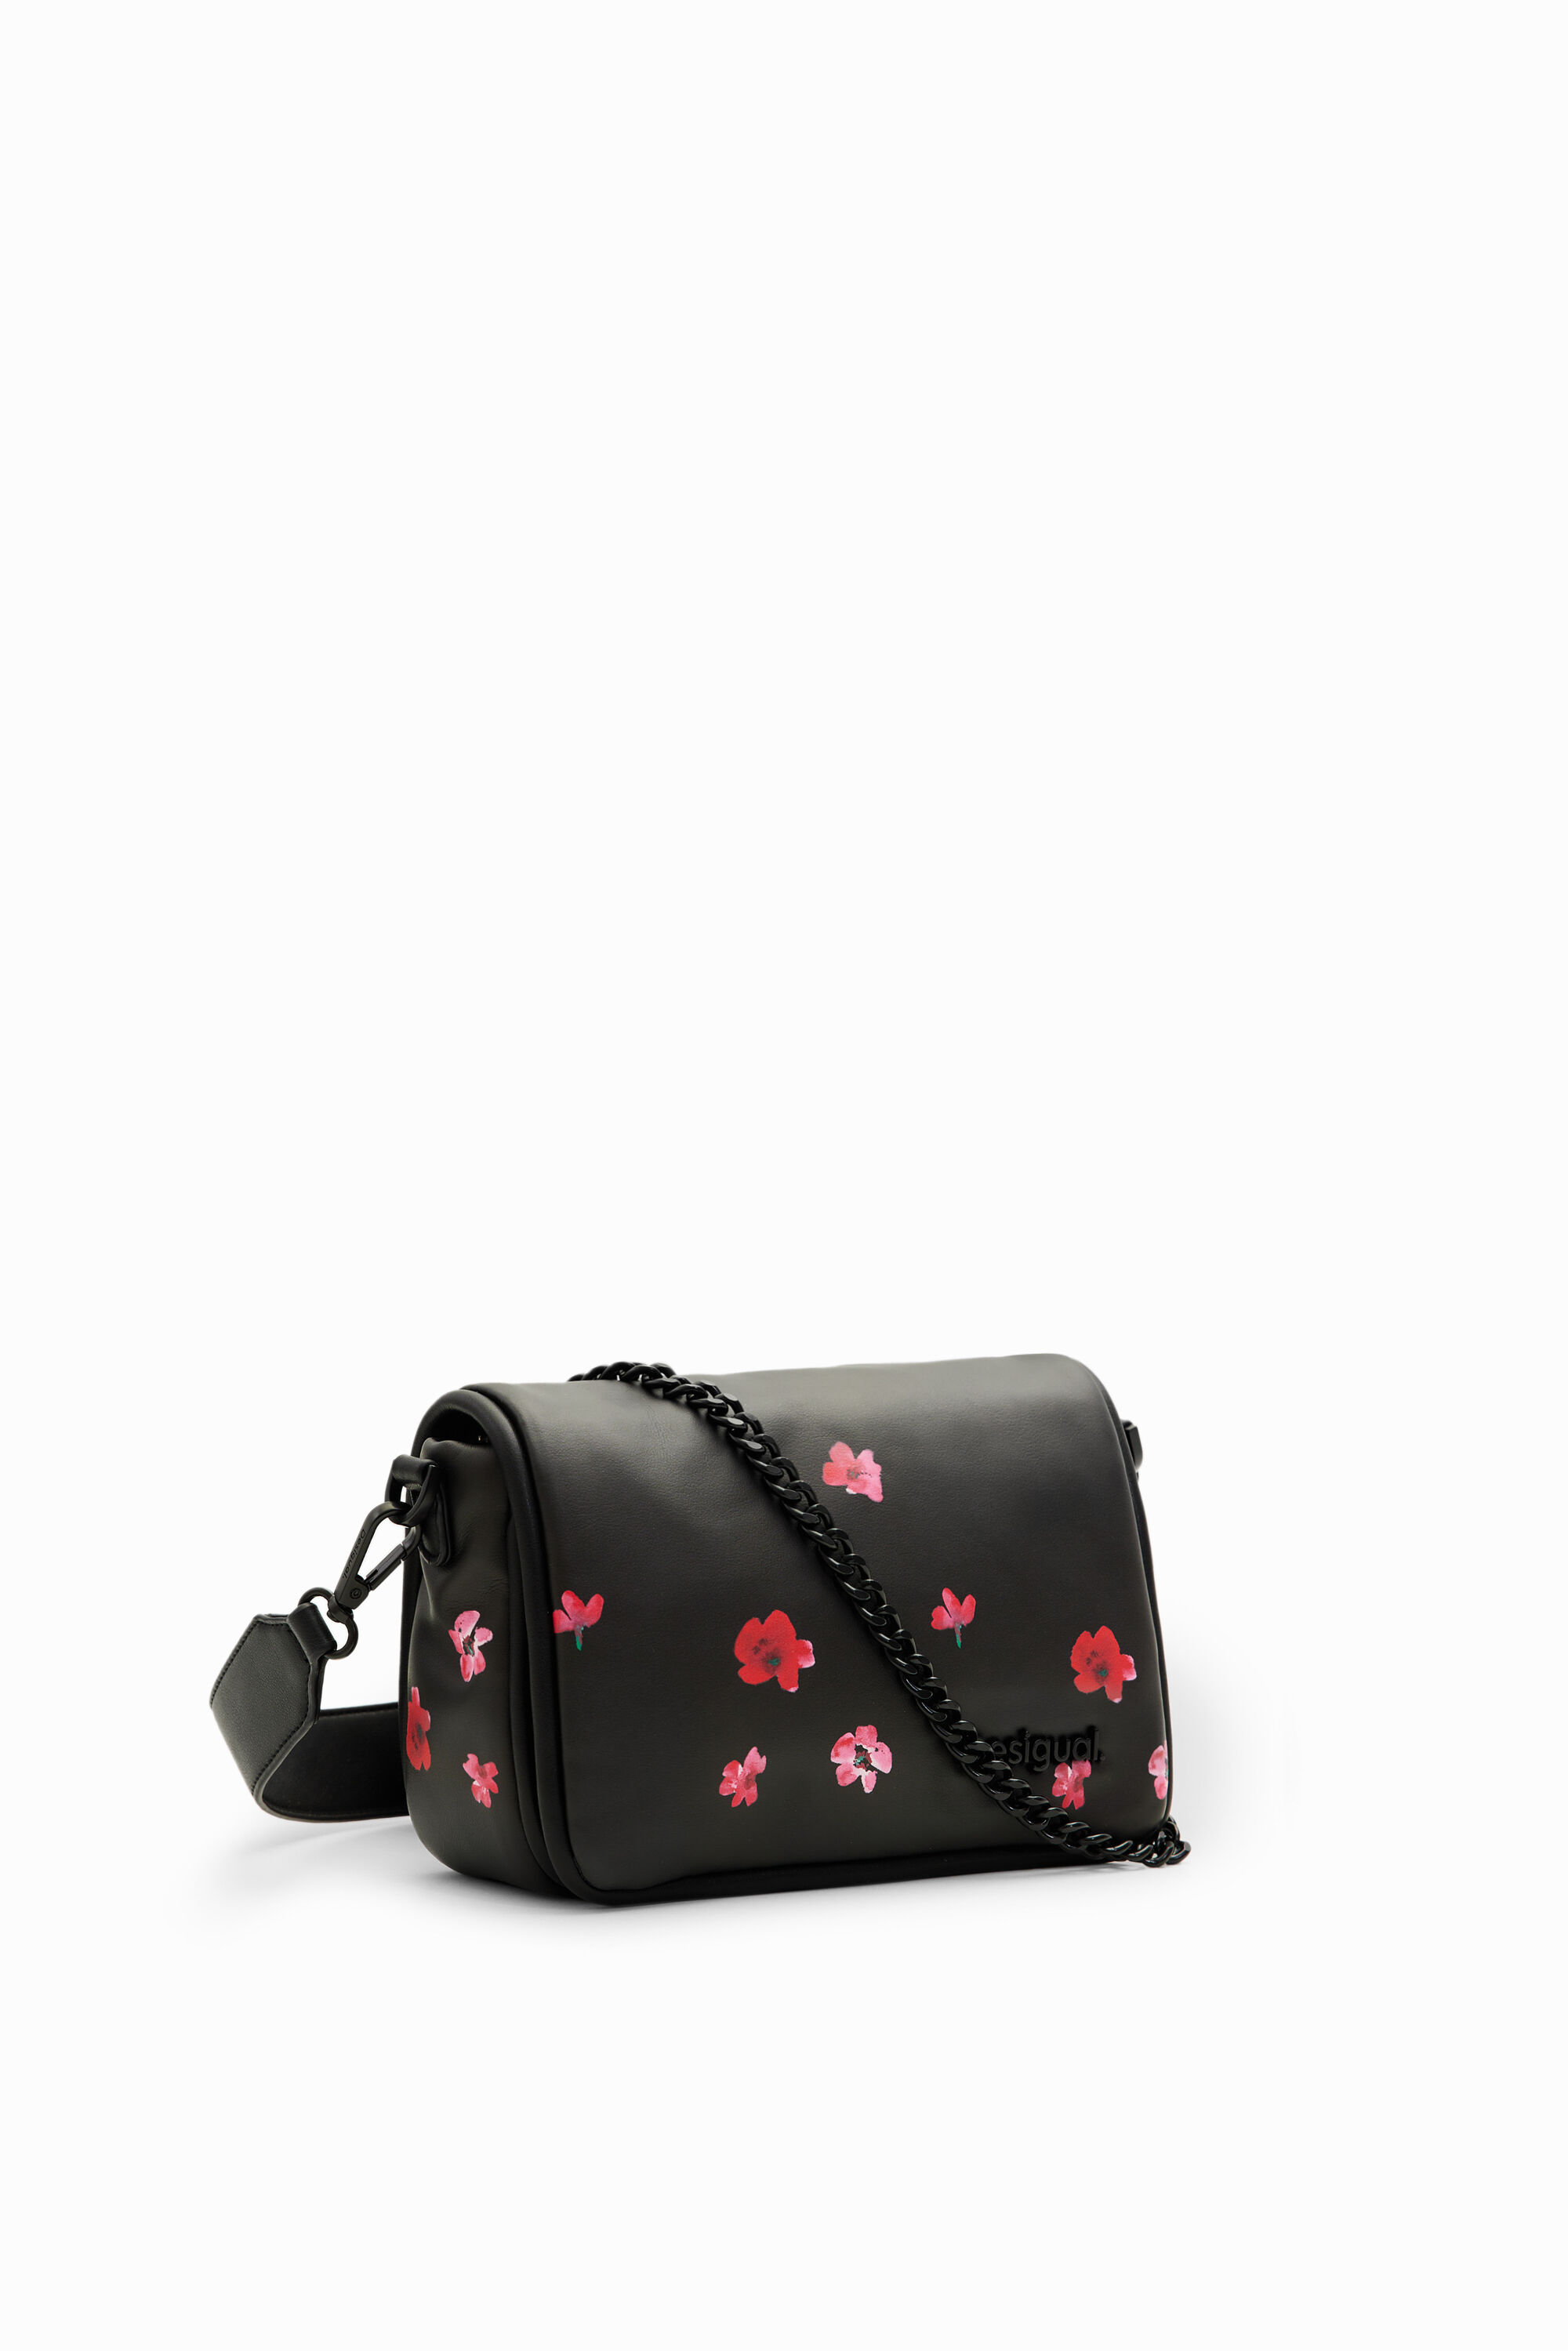 Desigual S Padded Floral Crossbody Bag In Black